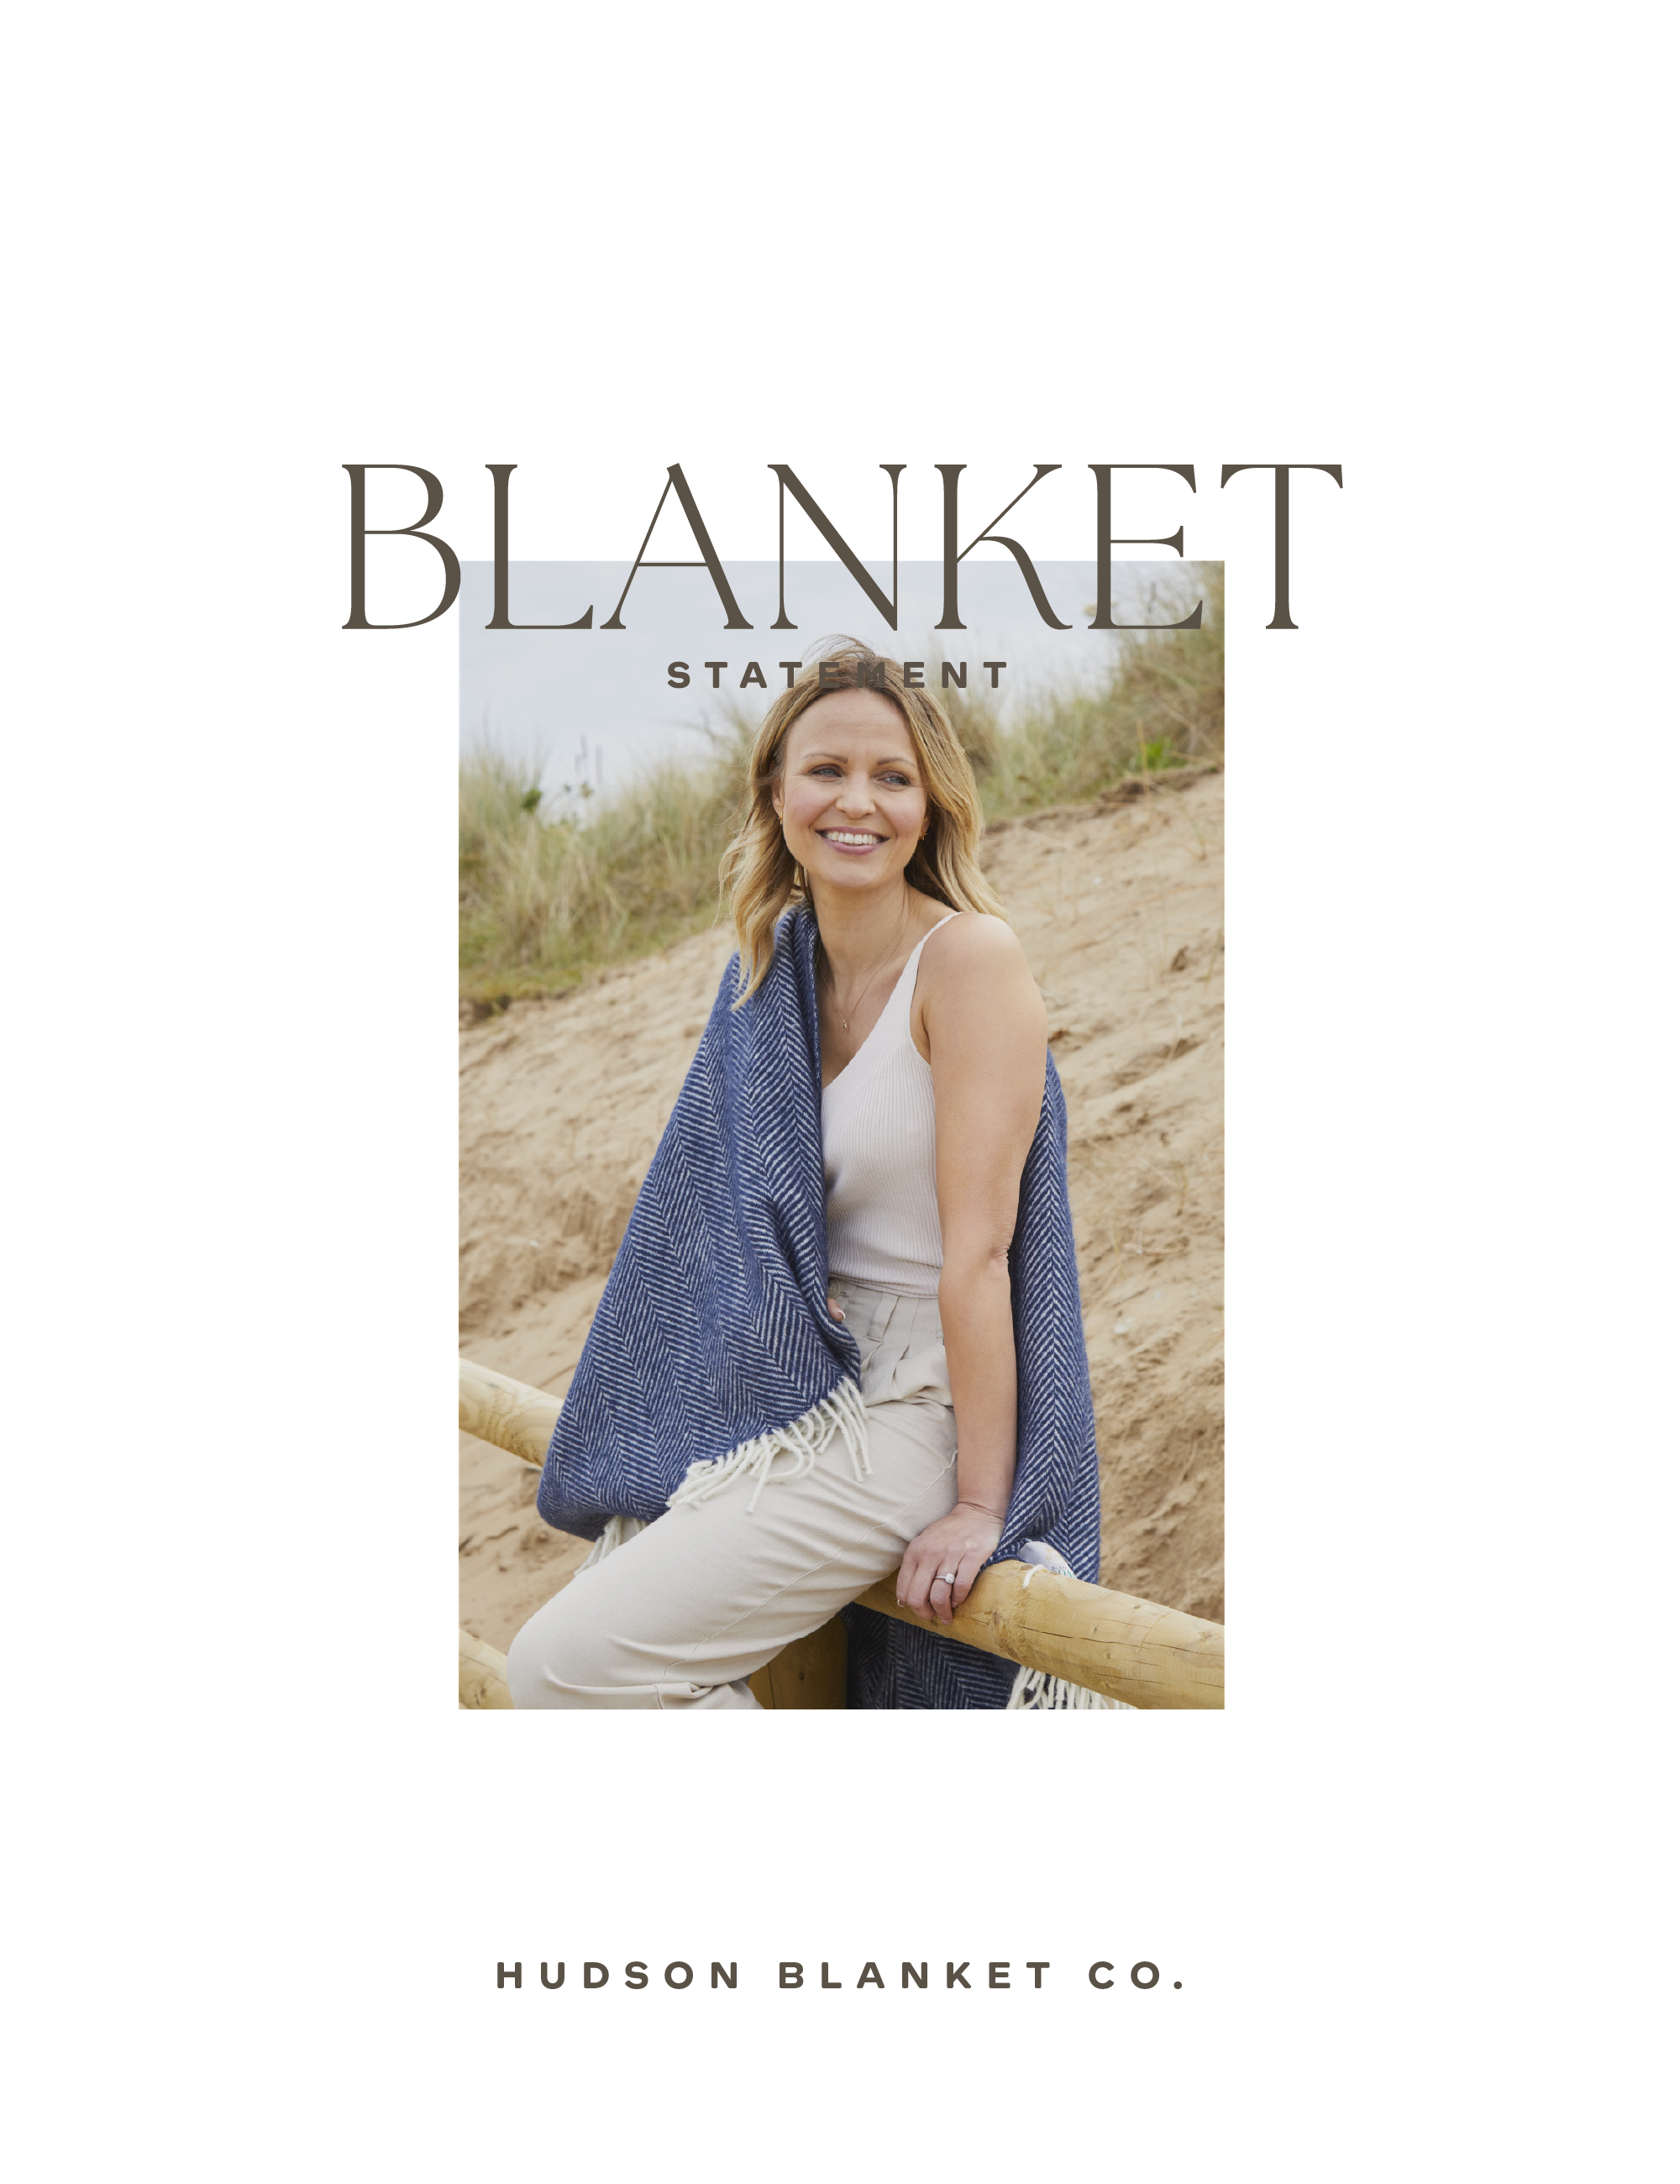 Blanket Statement Issue 1 Picnic Season New York New England Boston